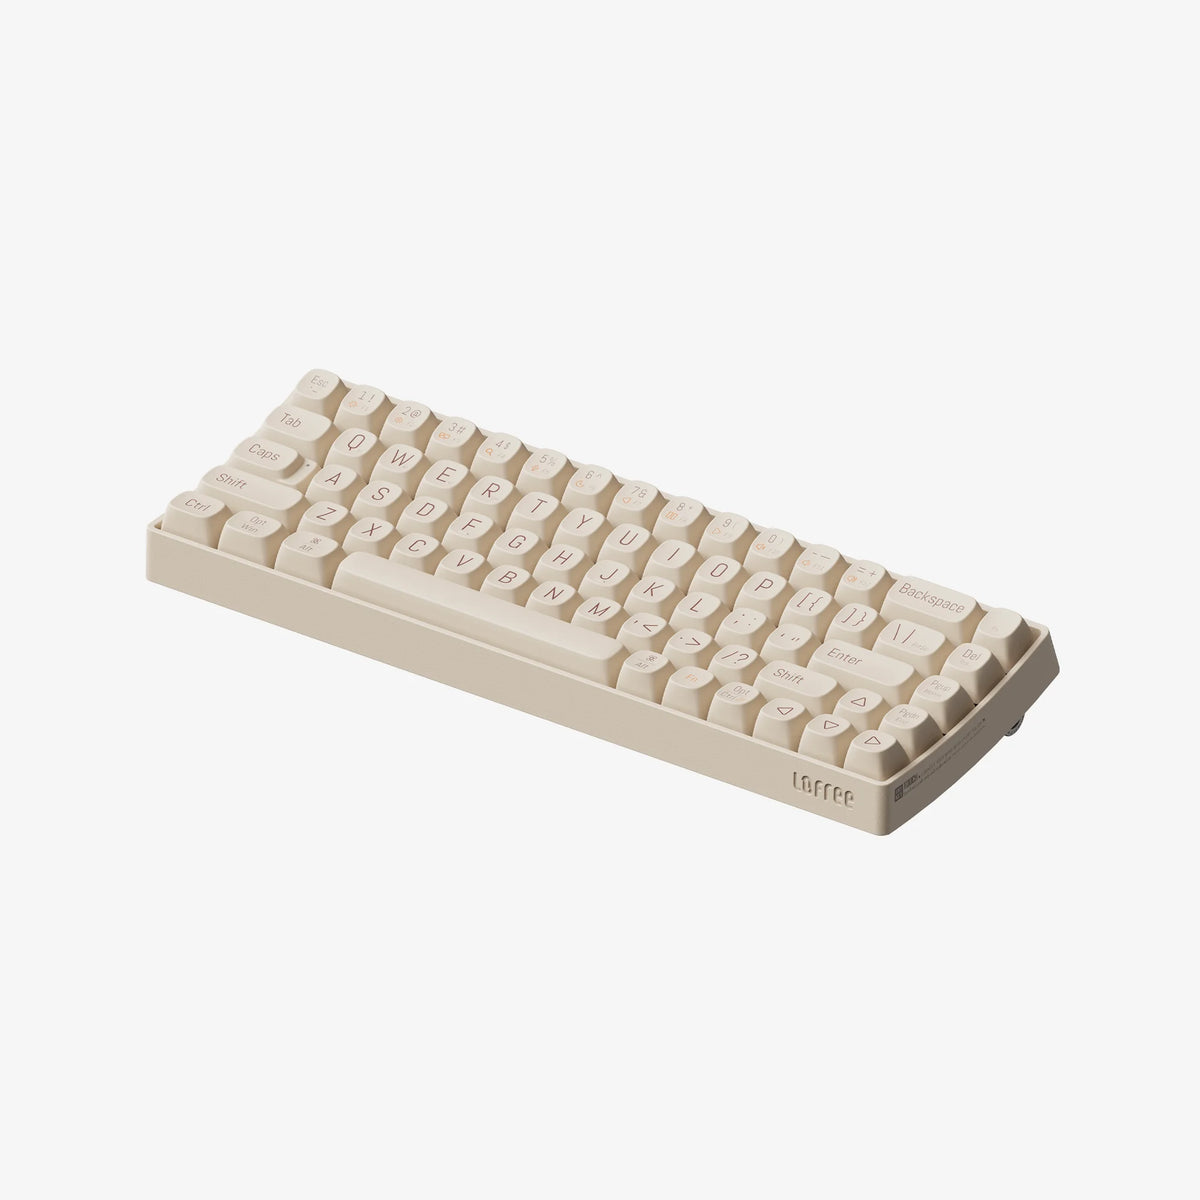 LOFREE TOUCH Triple Mode Mechanical Keyboard - Tofu